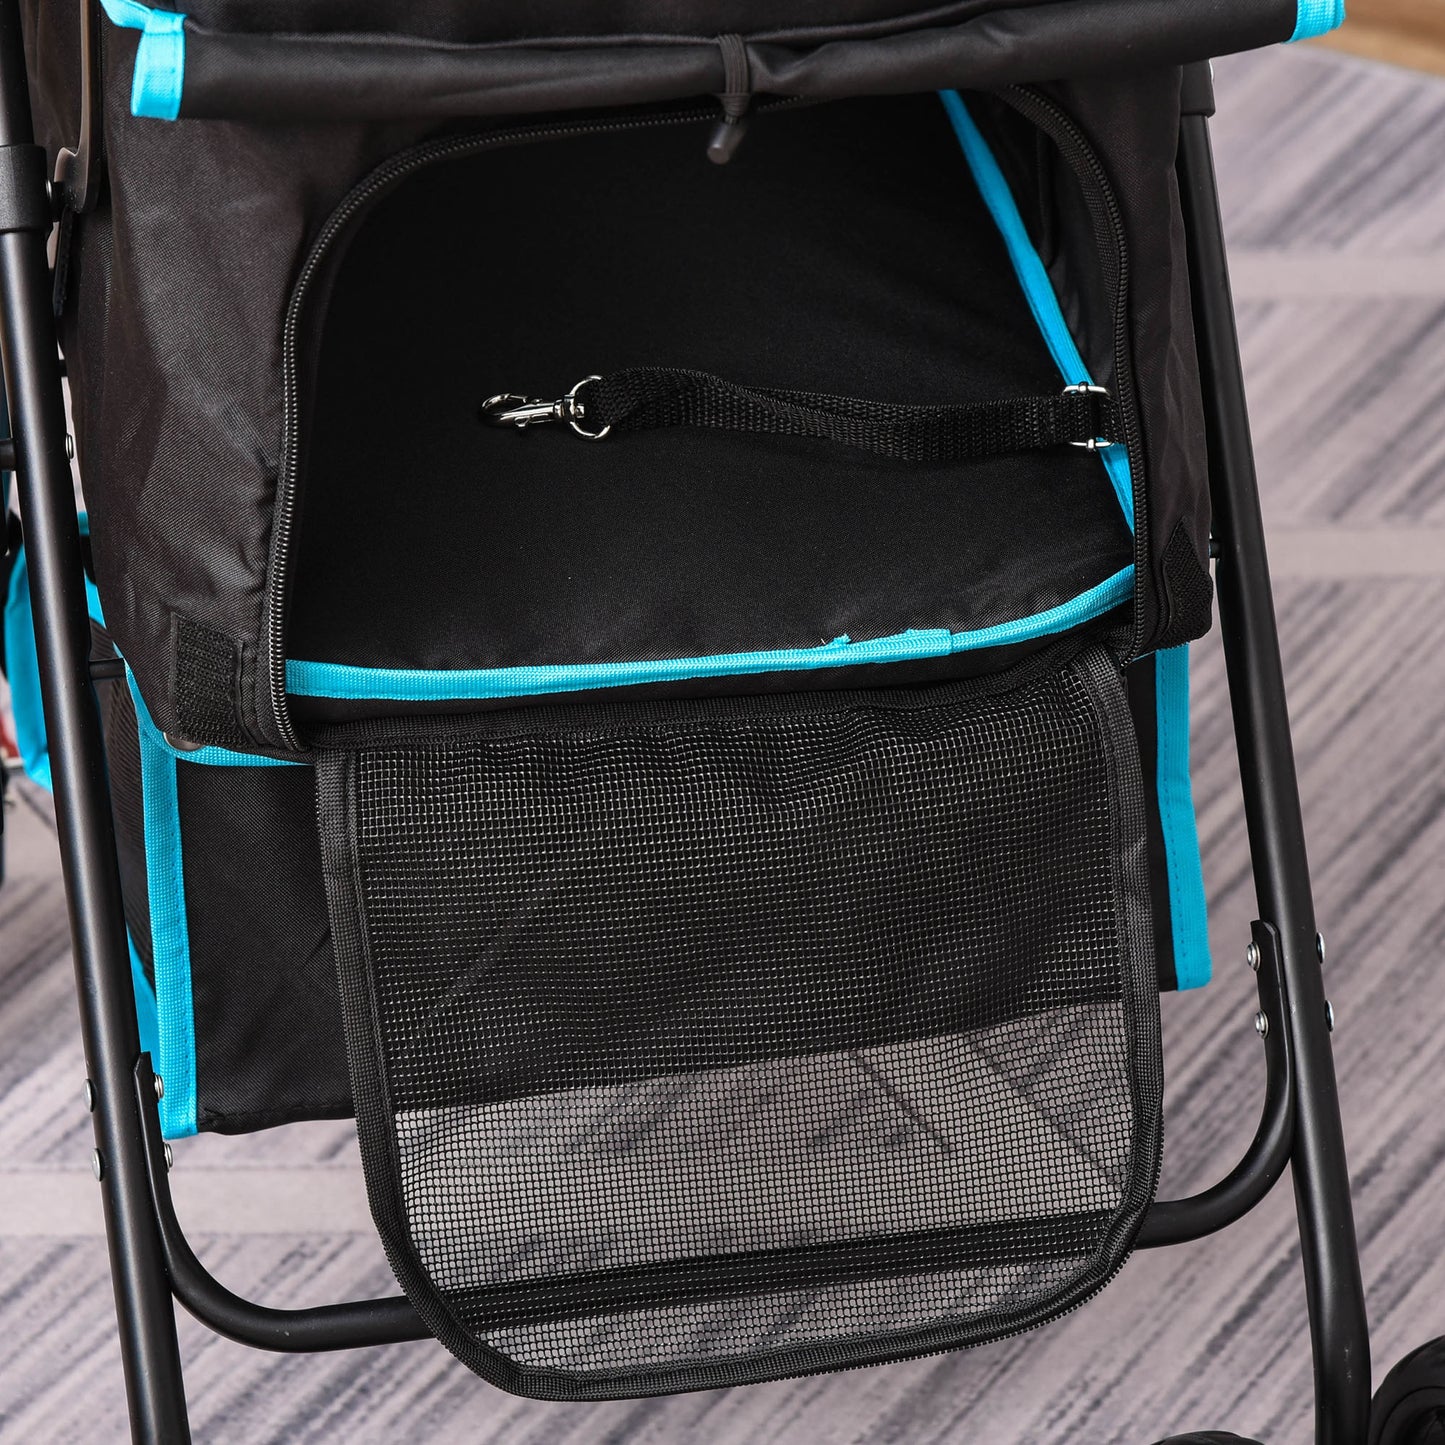 PawHut Pet Stroller Foldable Carriage w/ Brake Basket Adjustable Canopy Removable Cloth